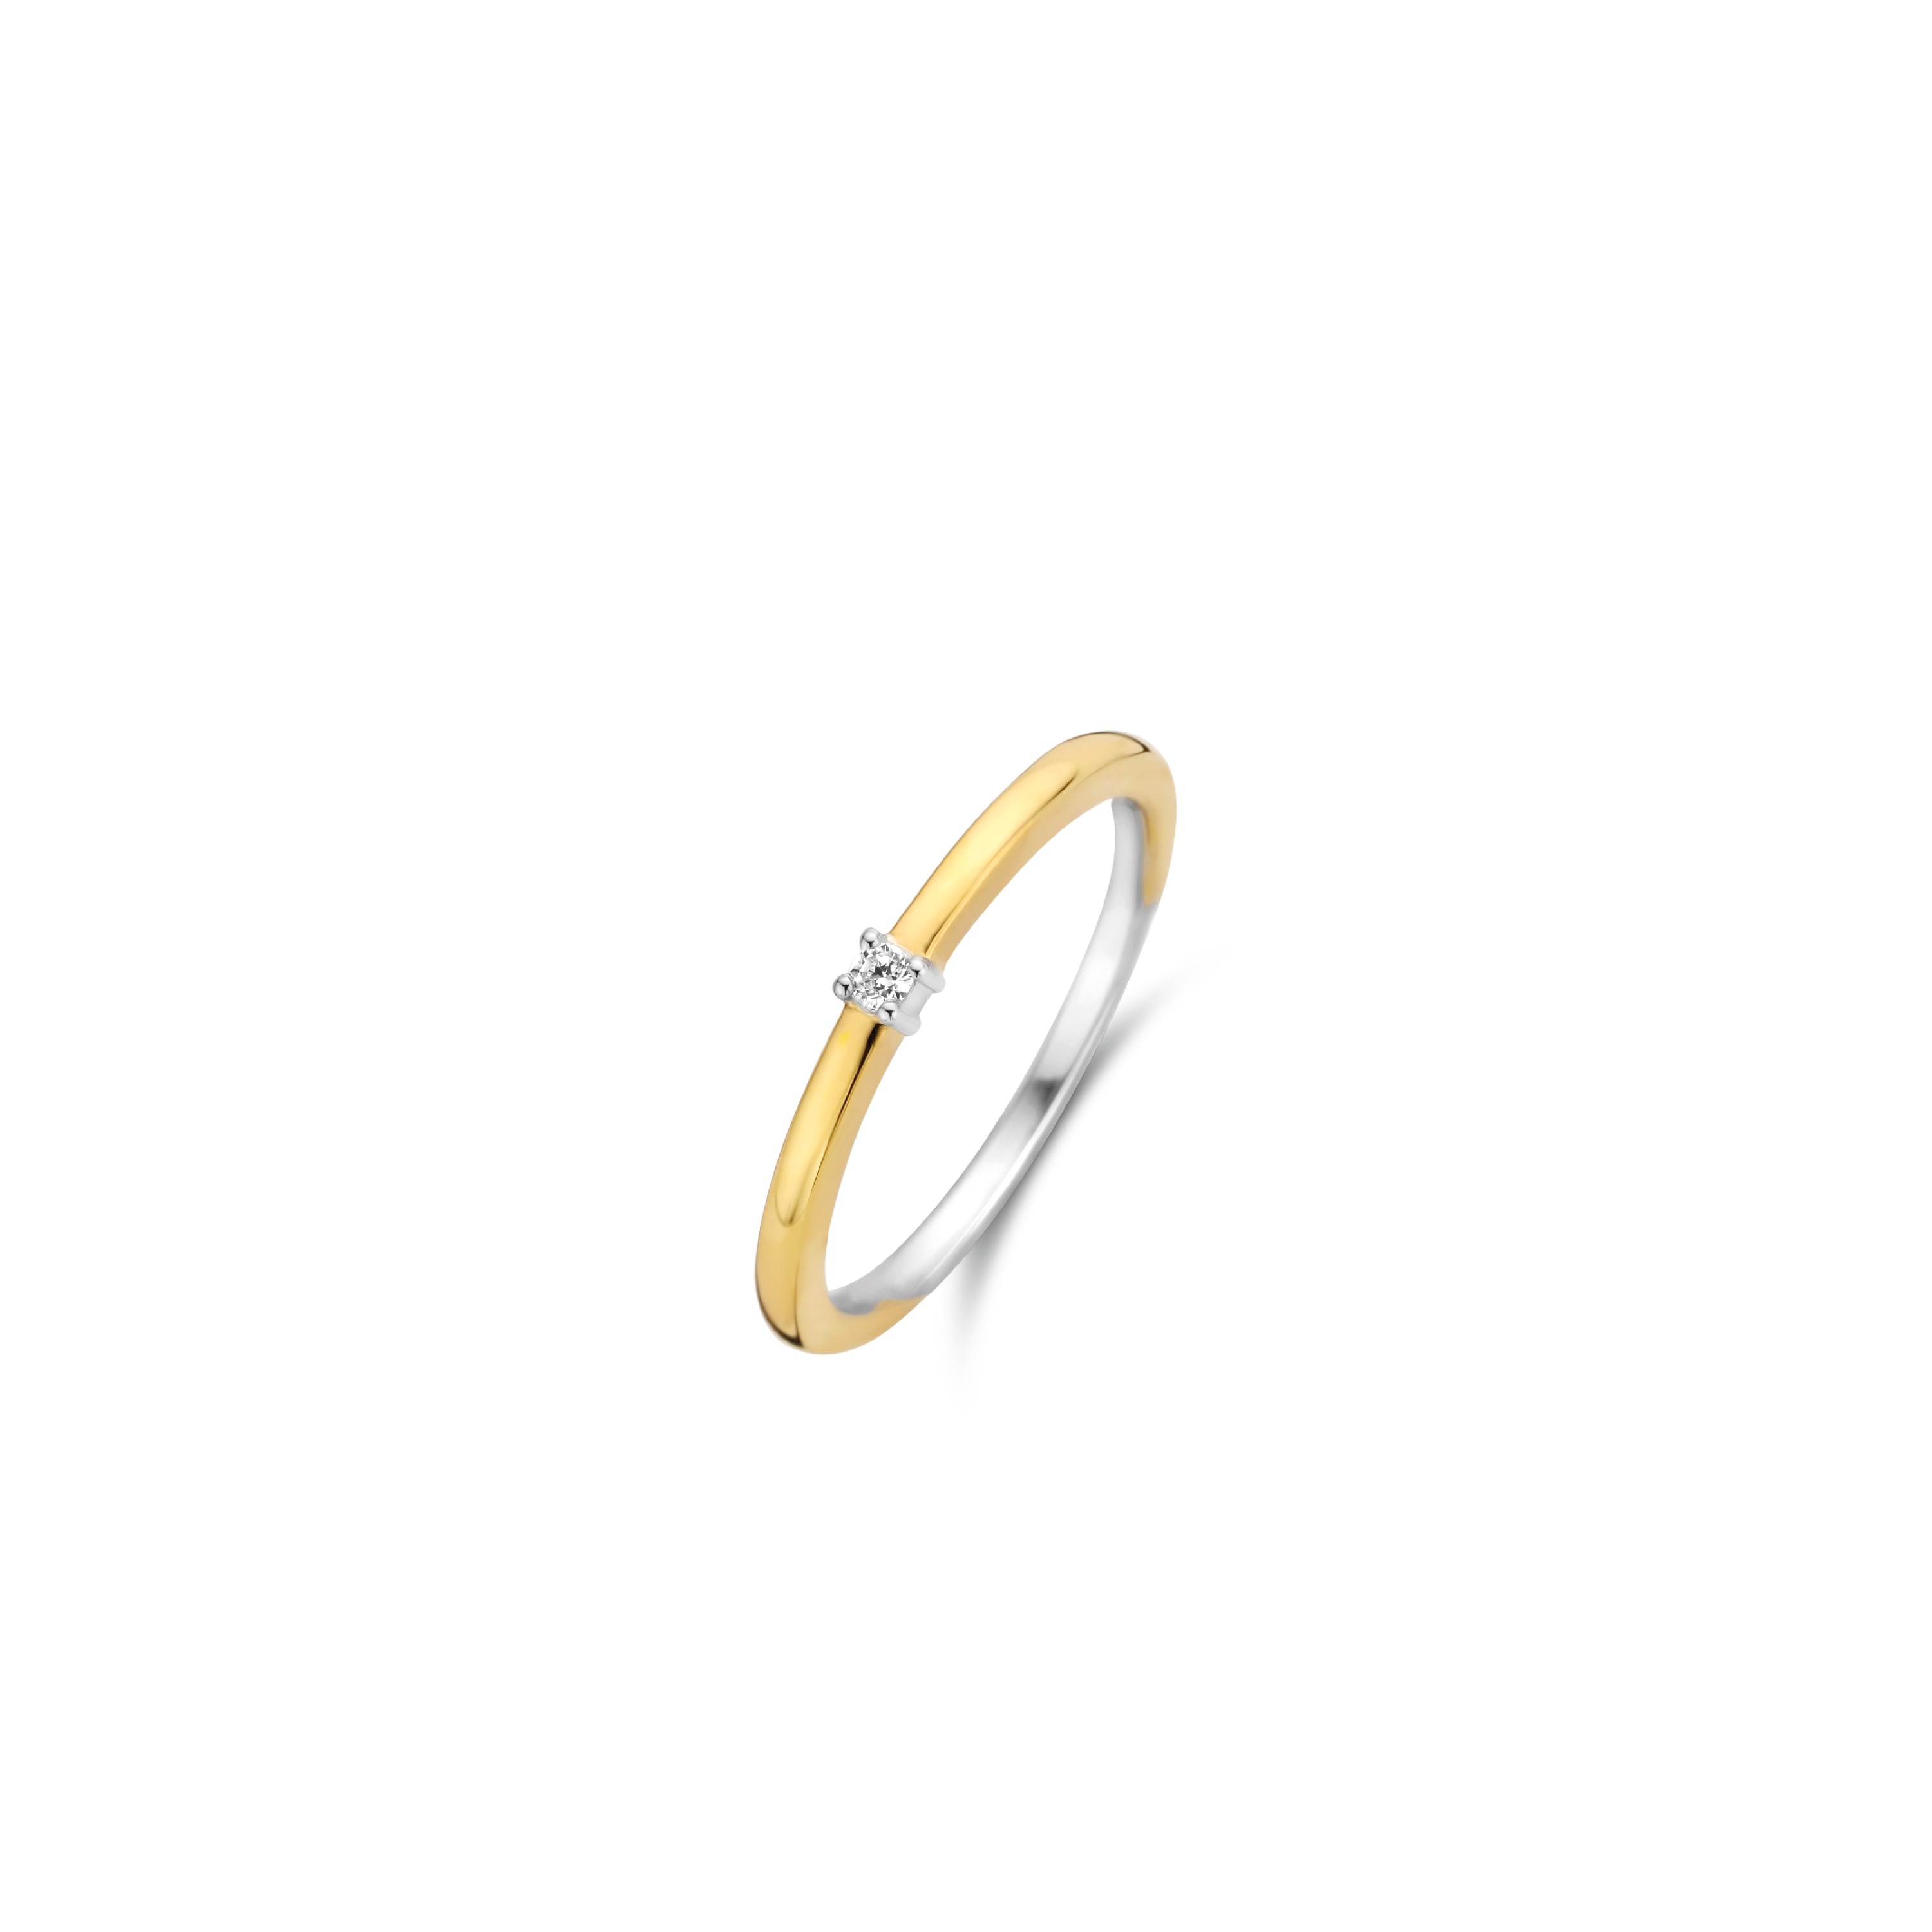 TI SENTO - Milano Ring 12210ZY Gala Jewelers Inc. White Oak, PA